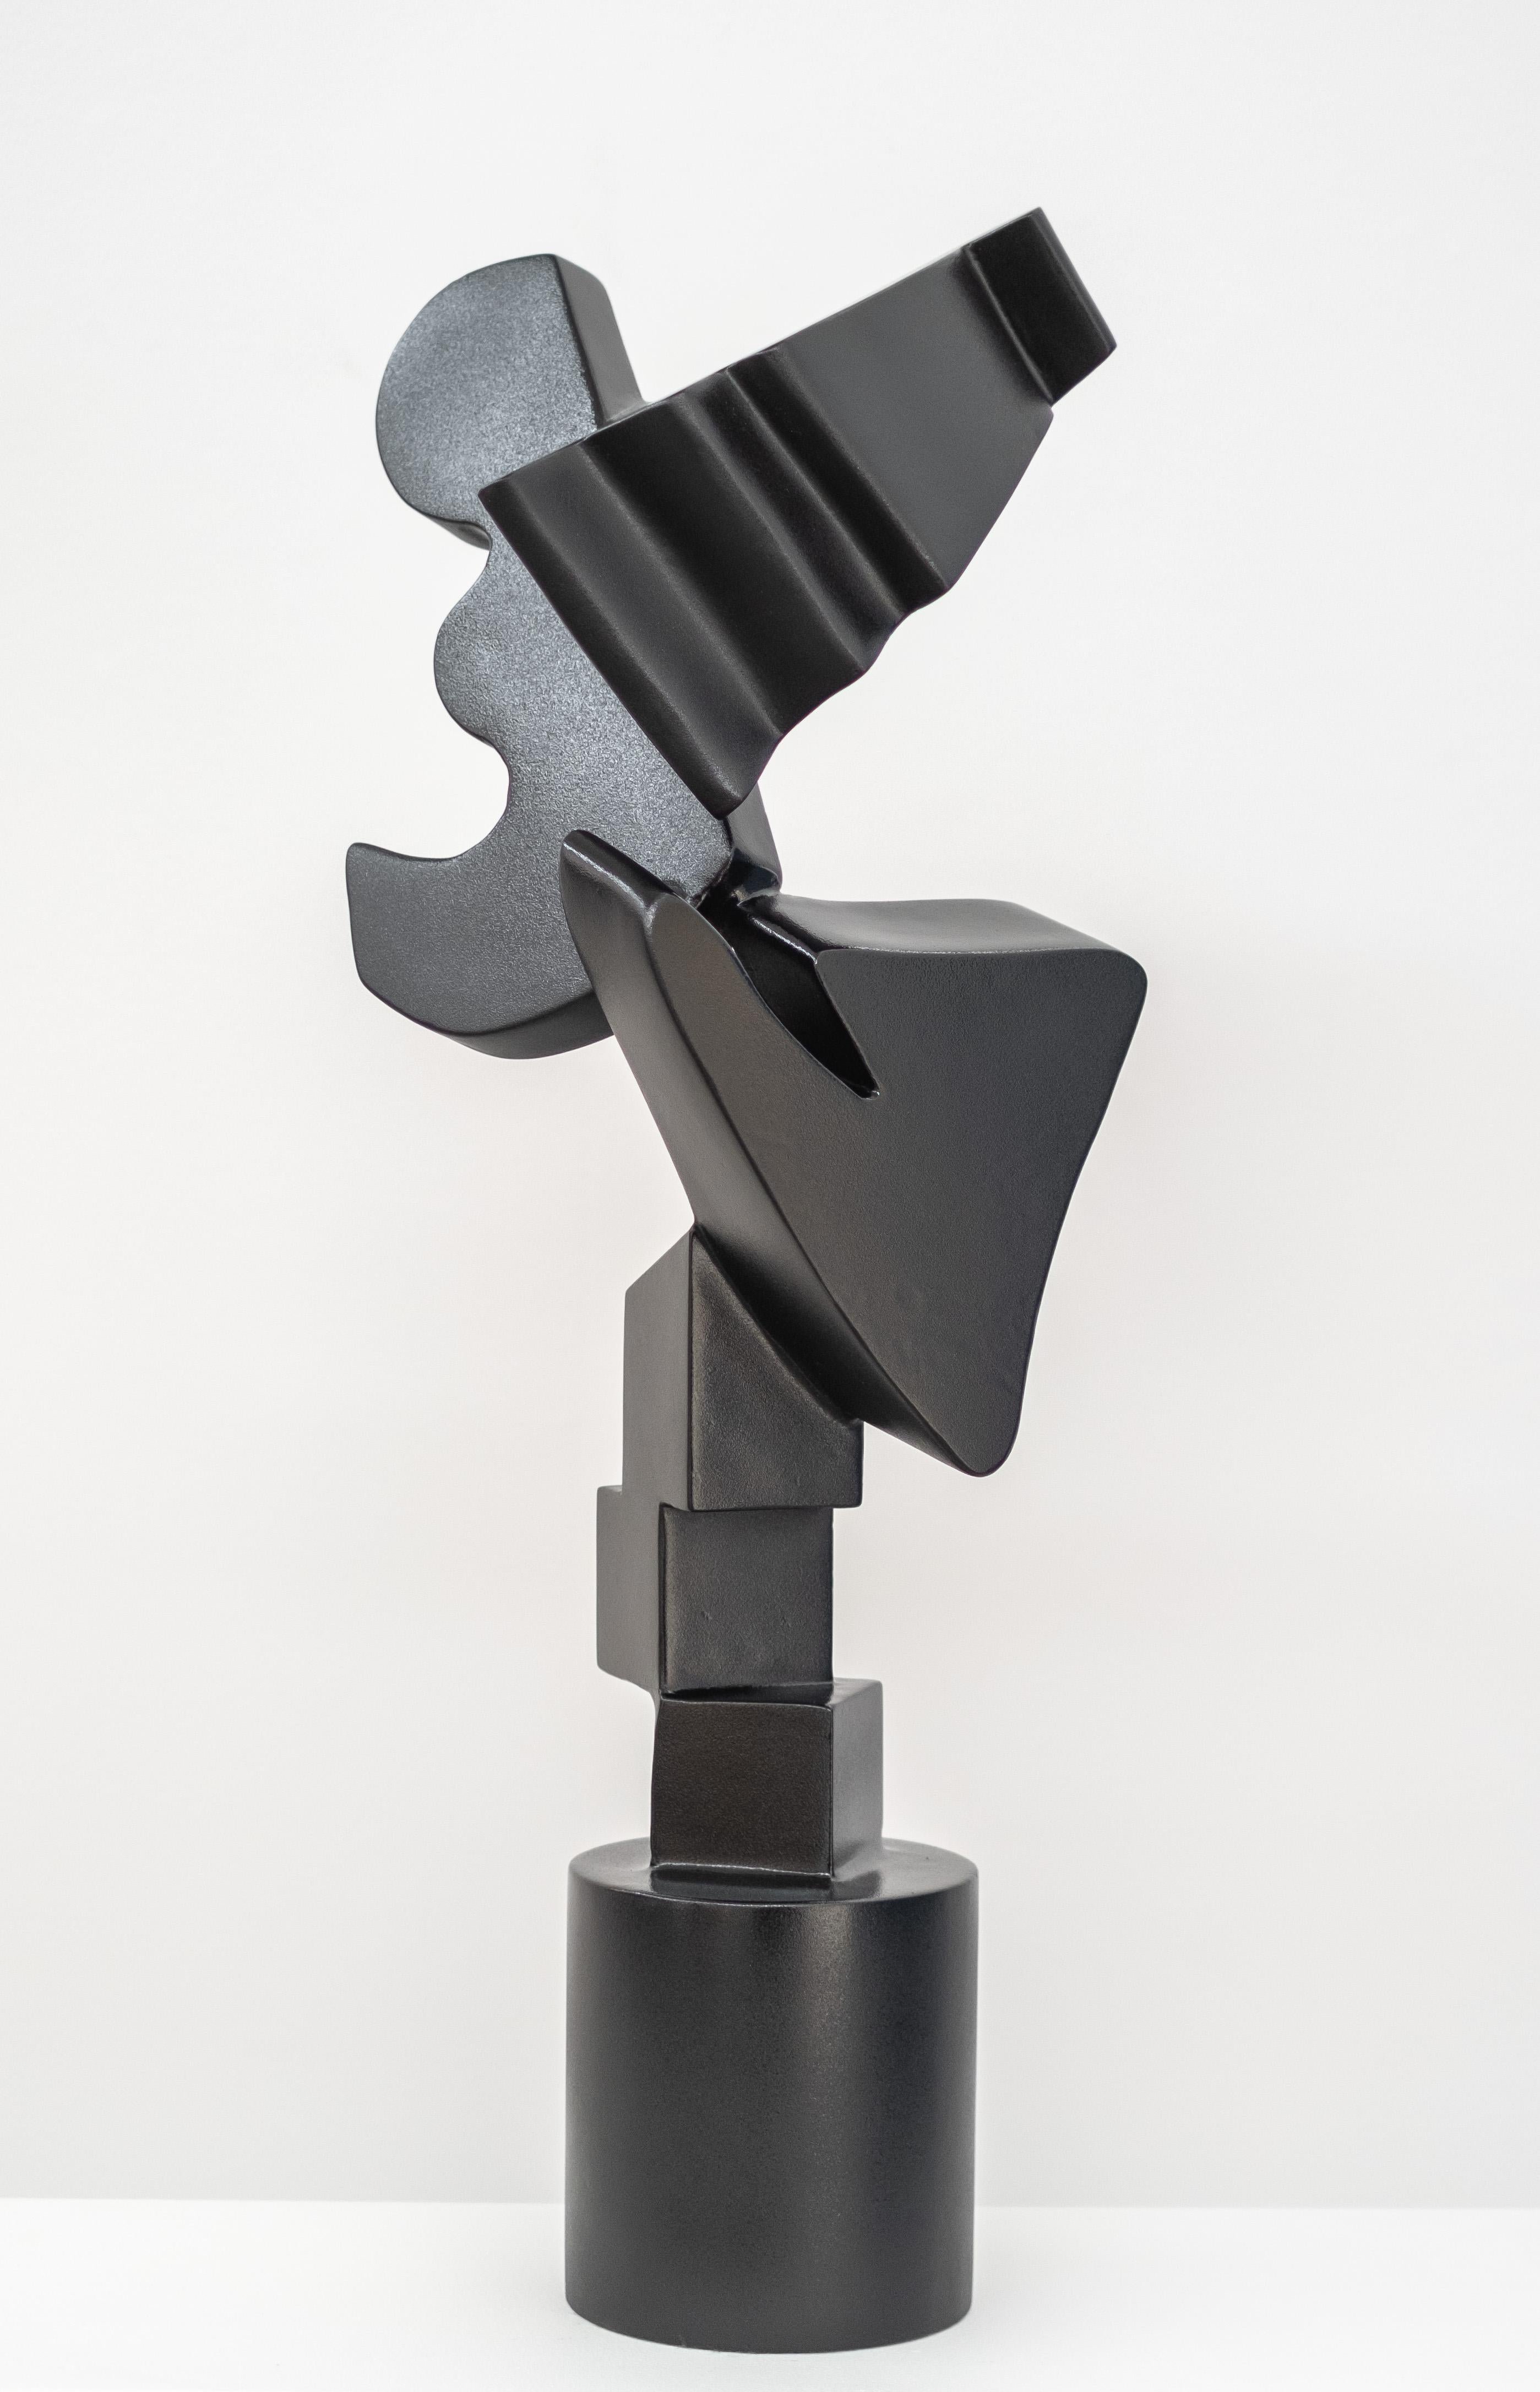 Abstract Sculpture Viktor Mitic - Variant monochrome - abstrait, pop art, sculpture en aluminium peint